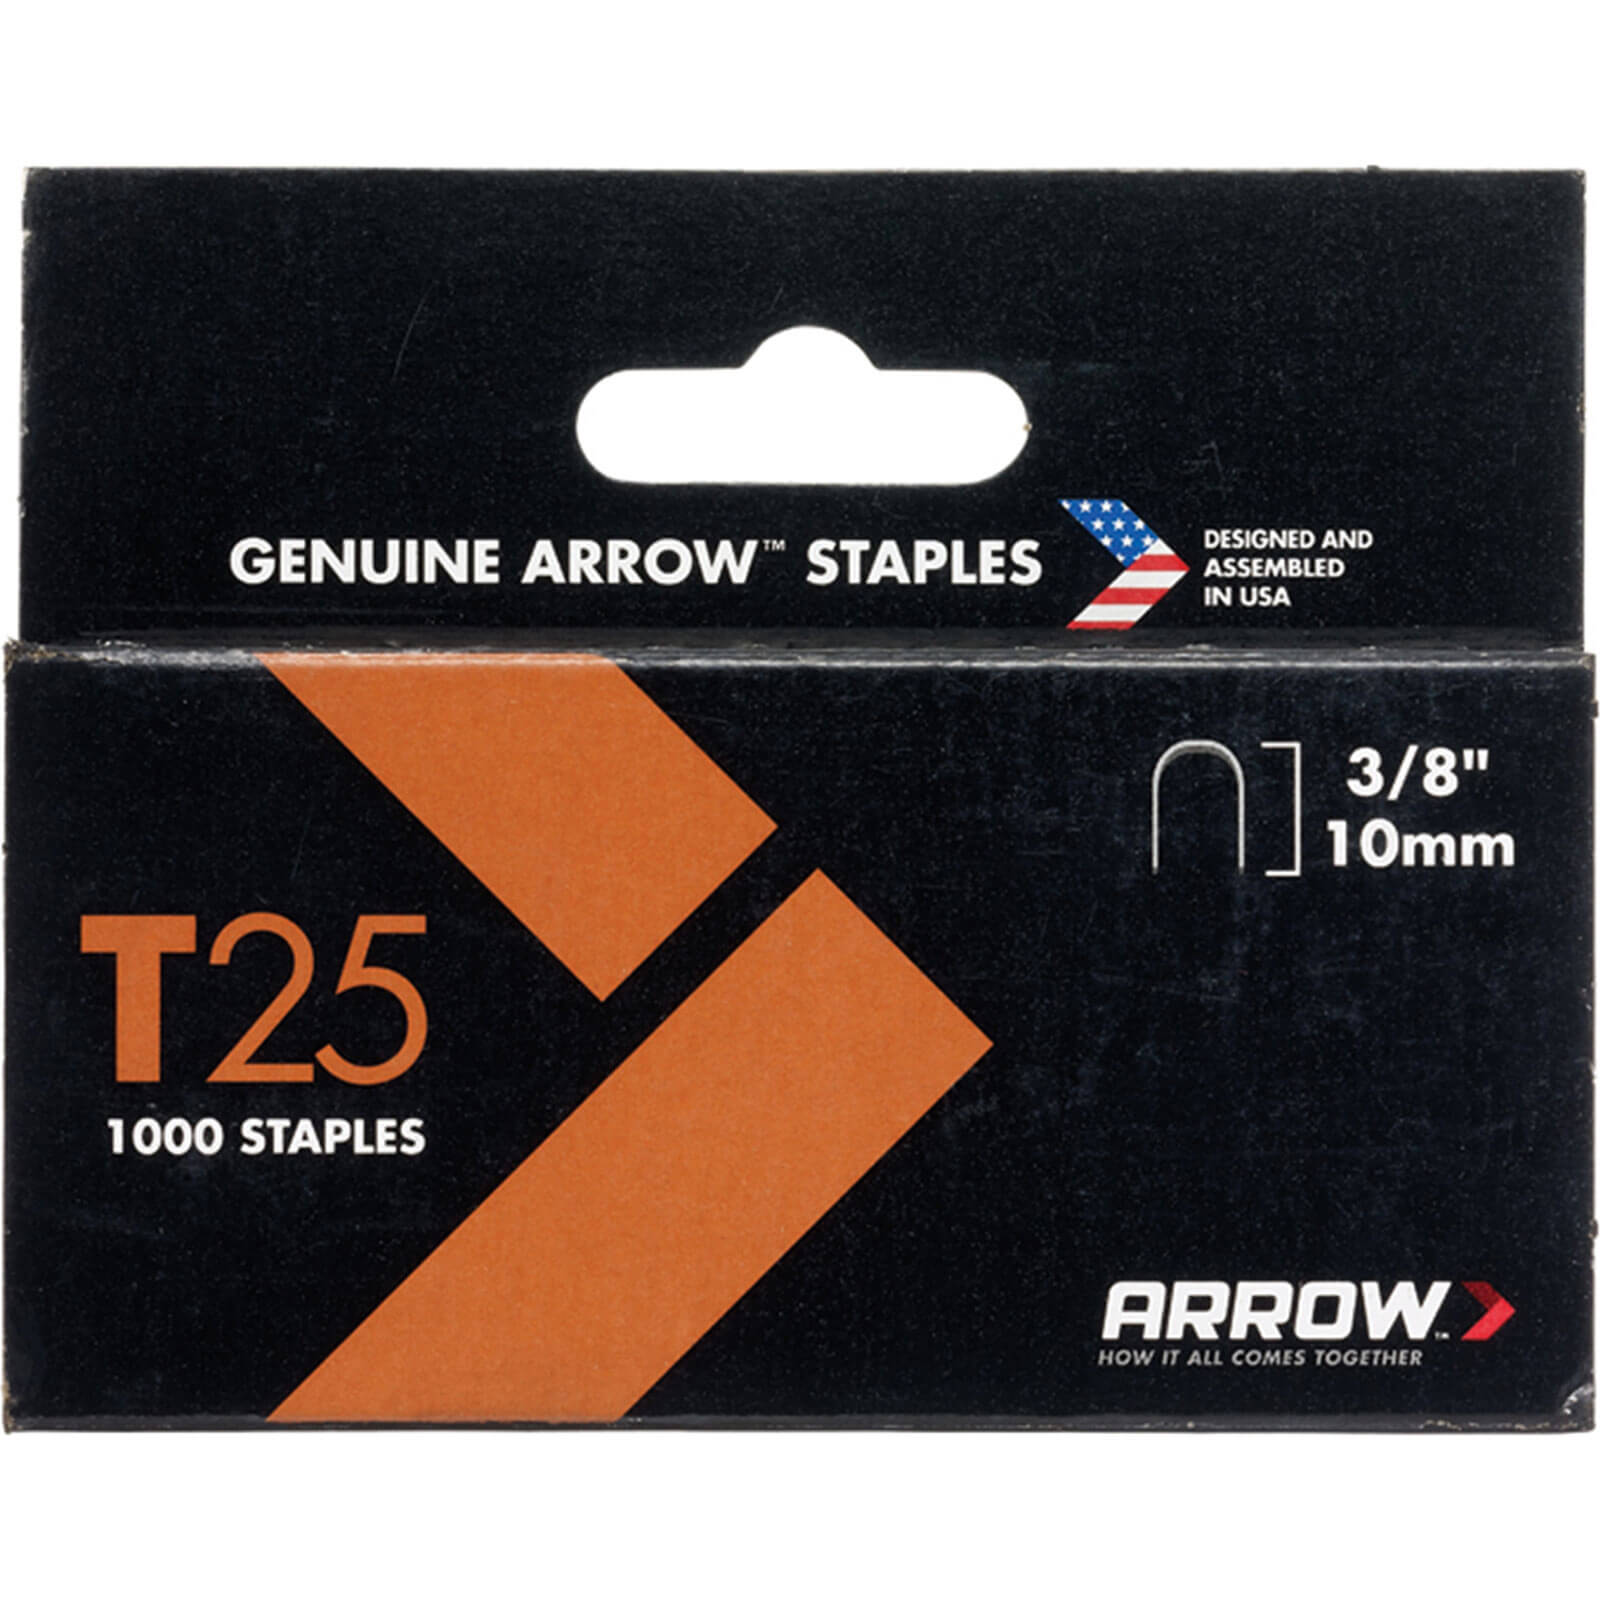 Arrow T25 Staples Pack of 5000 3/8"